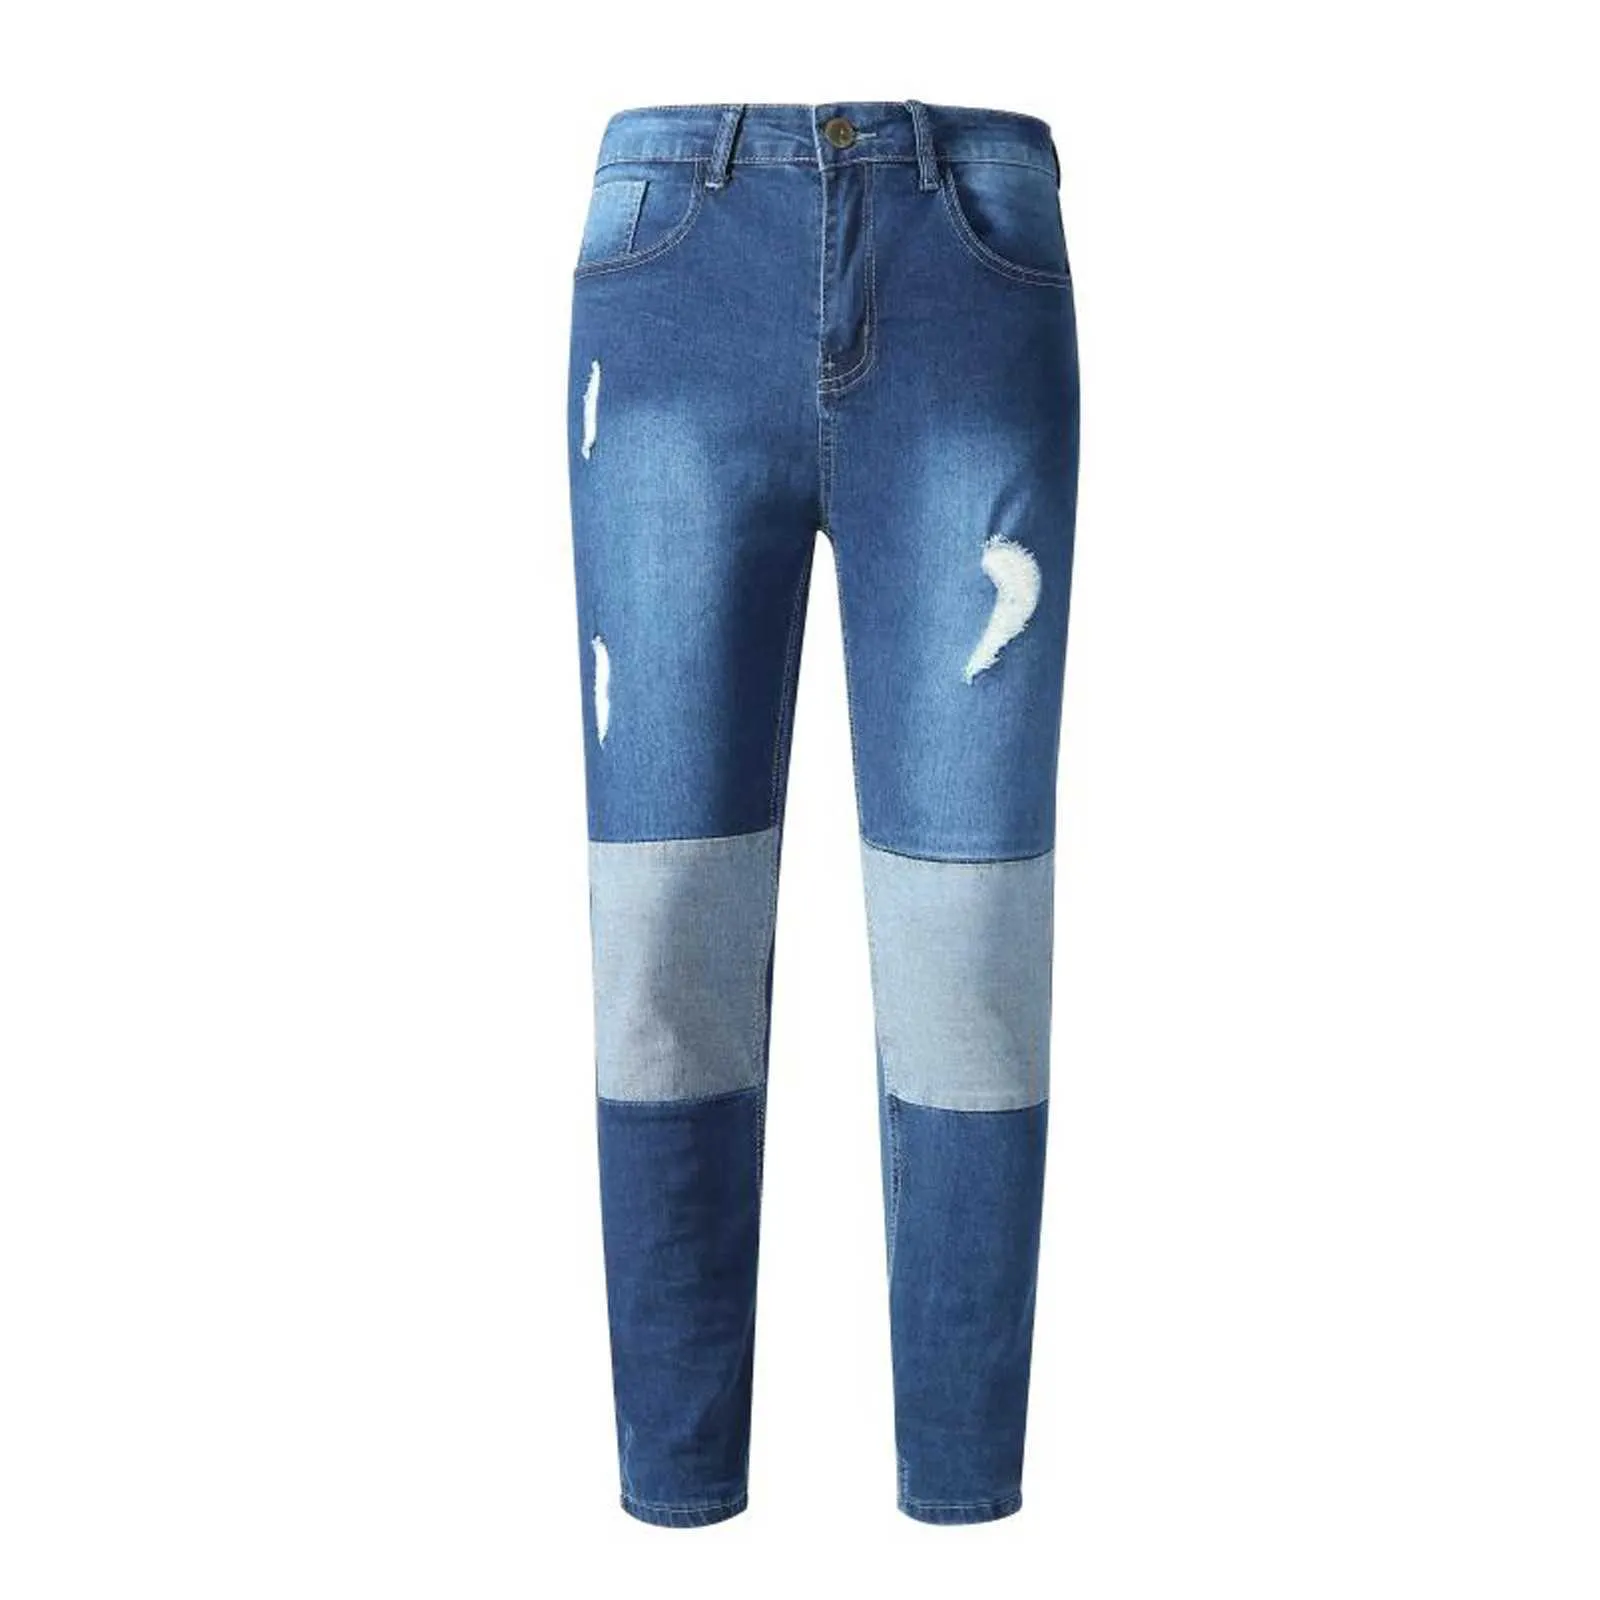 Fashion Men Hole Ripped Zipper High Waist Stretch Skinny Denim Pants Trousers Casual Skinny Jeans Pencil Pants Plus Size#35 X0621